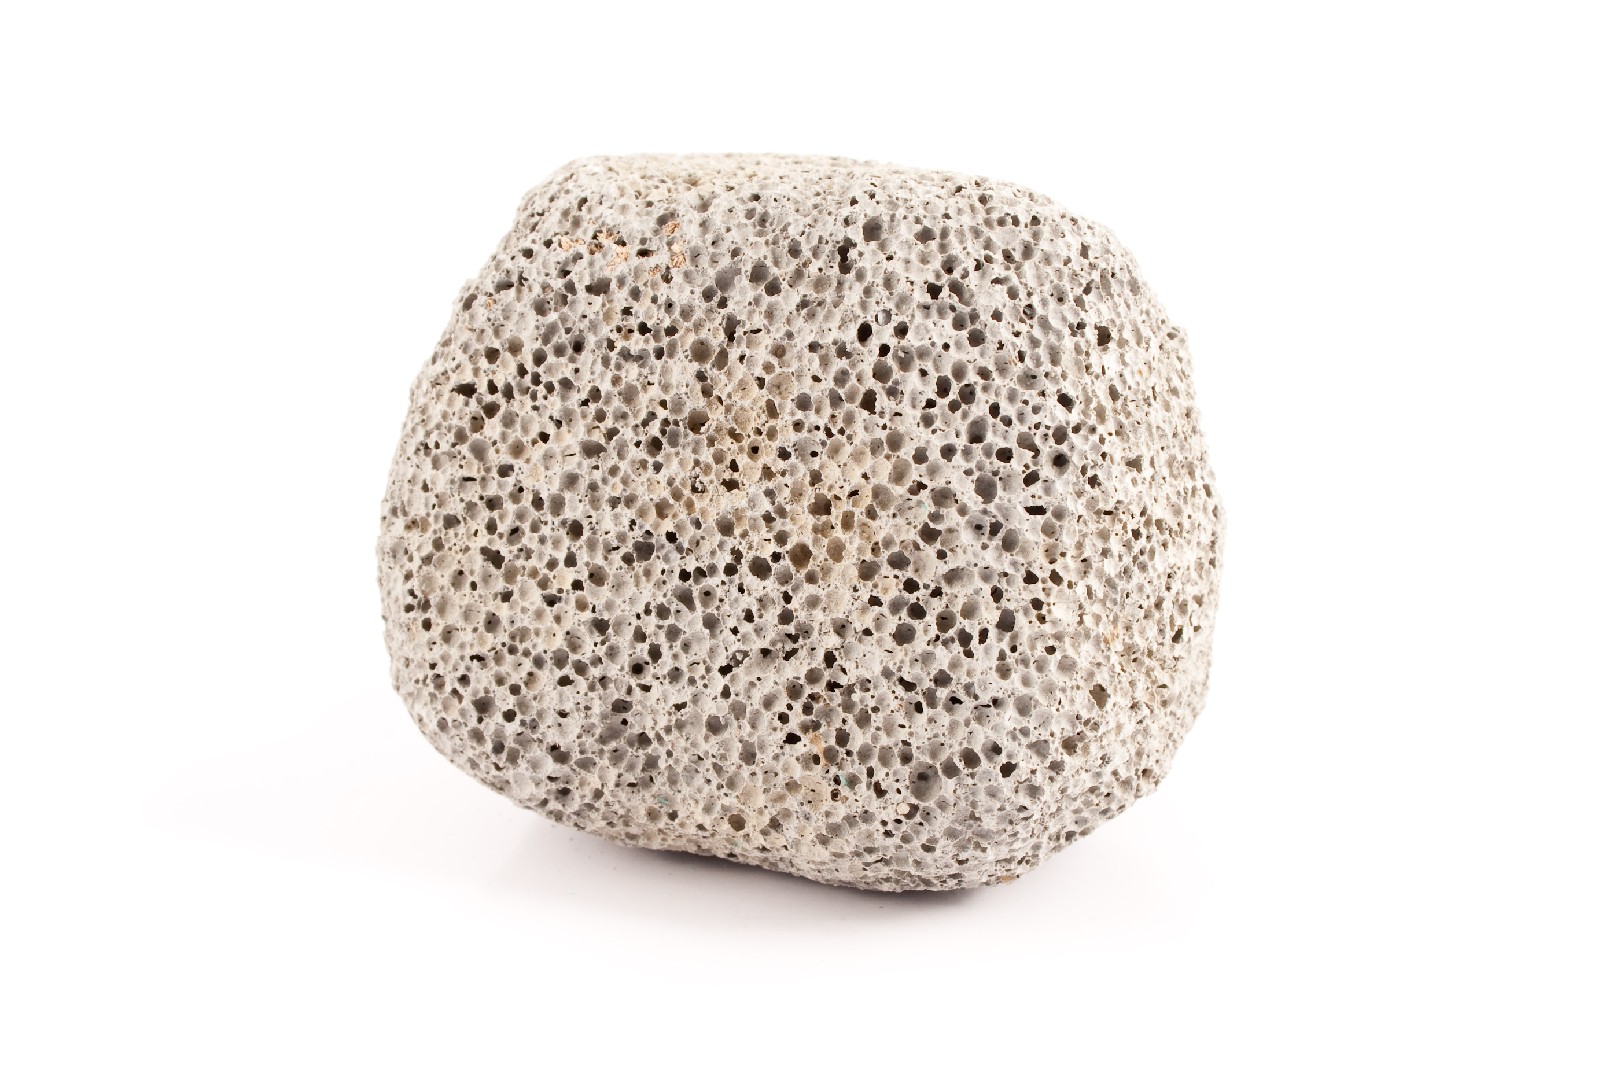 Pedra-Pomes (Pumice)